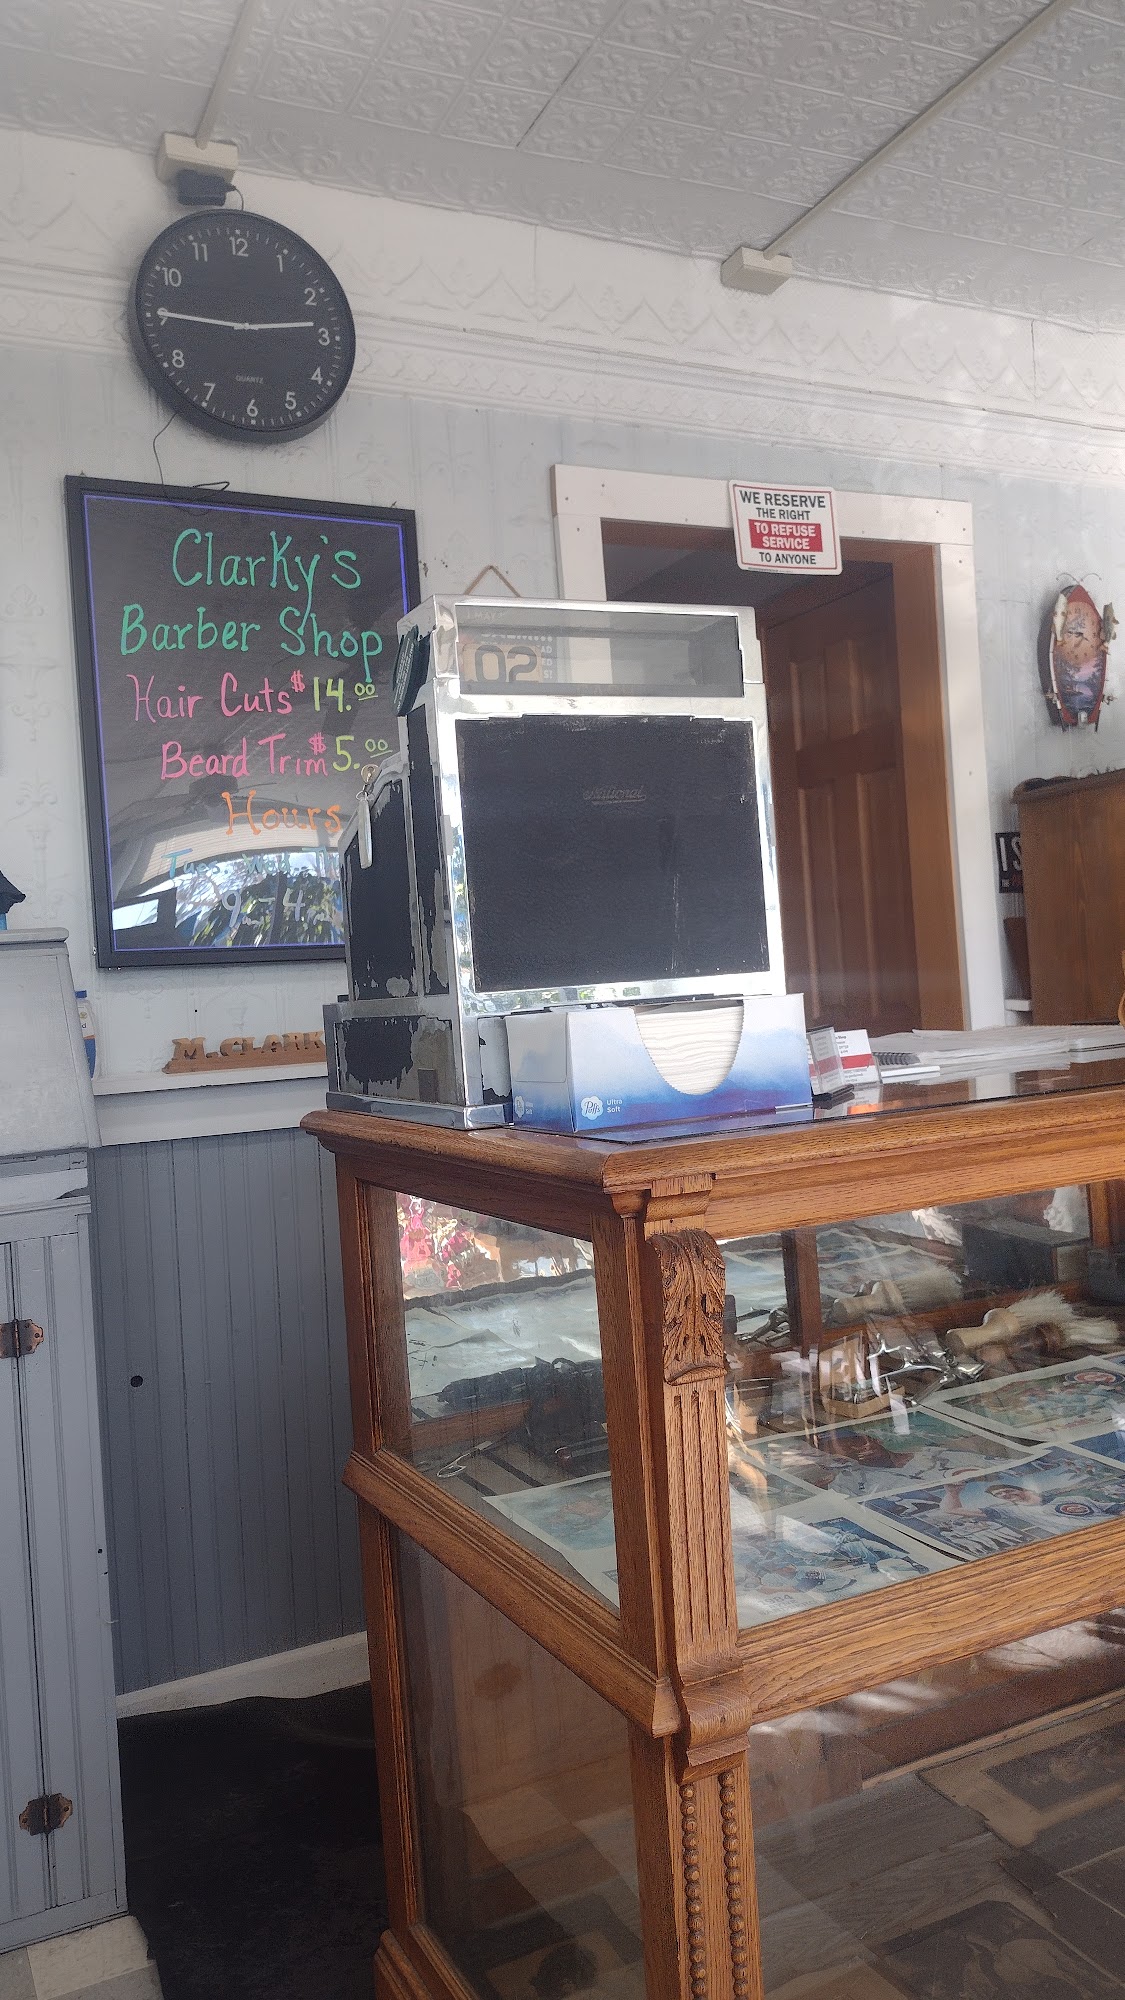 Clarky's Barber Shop